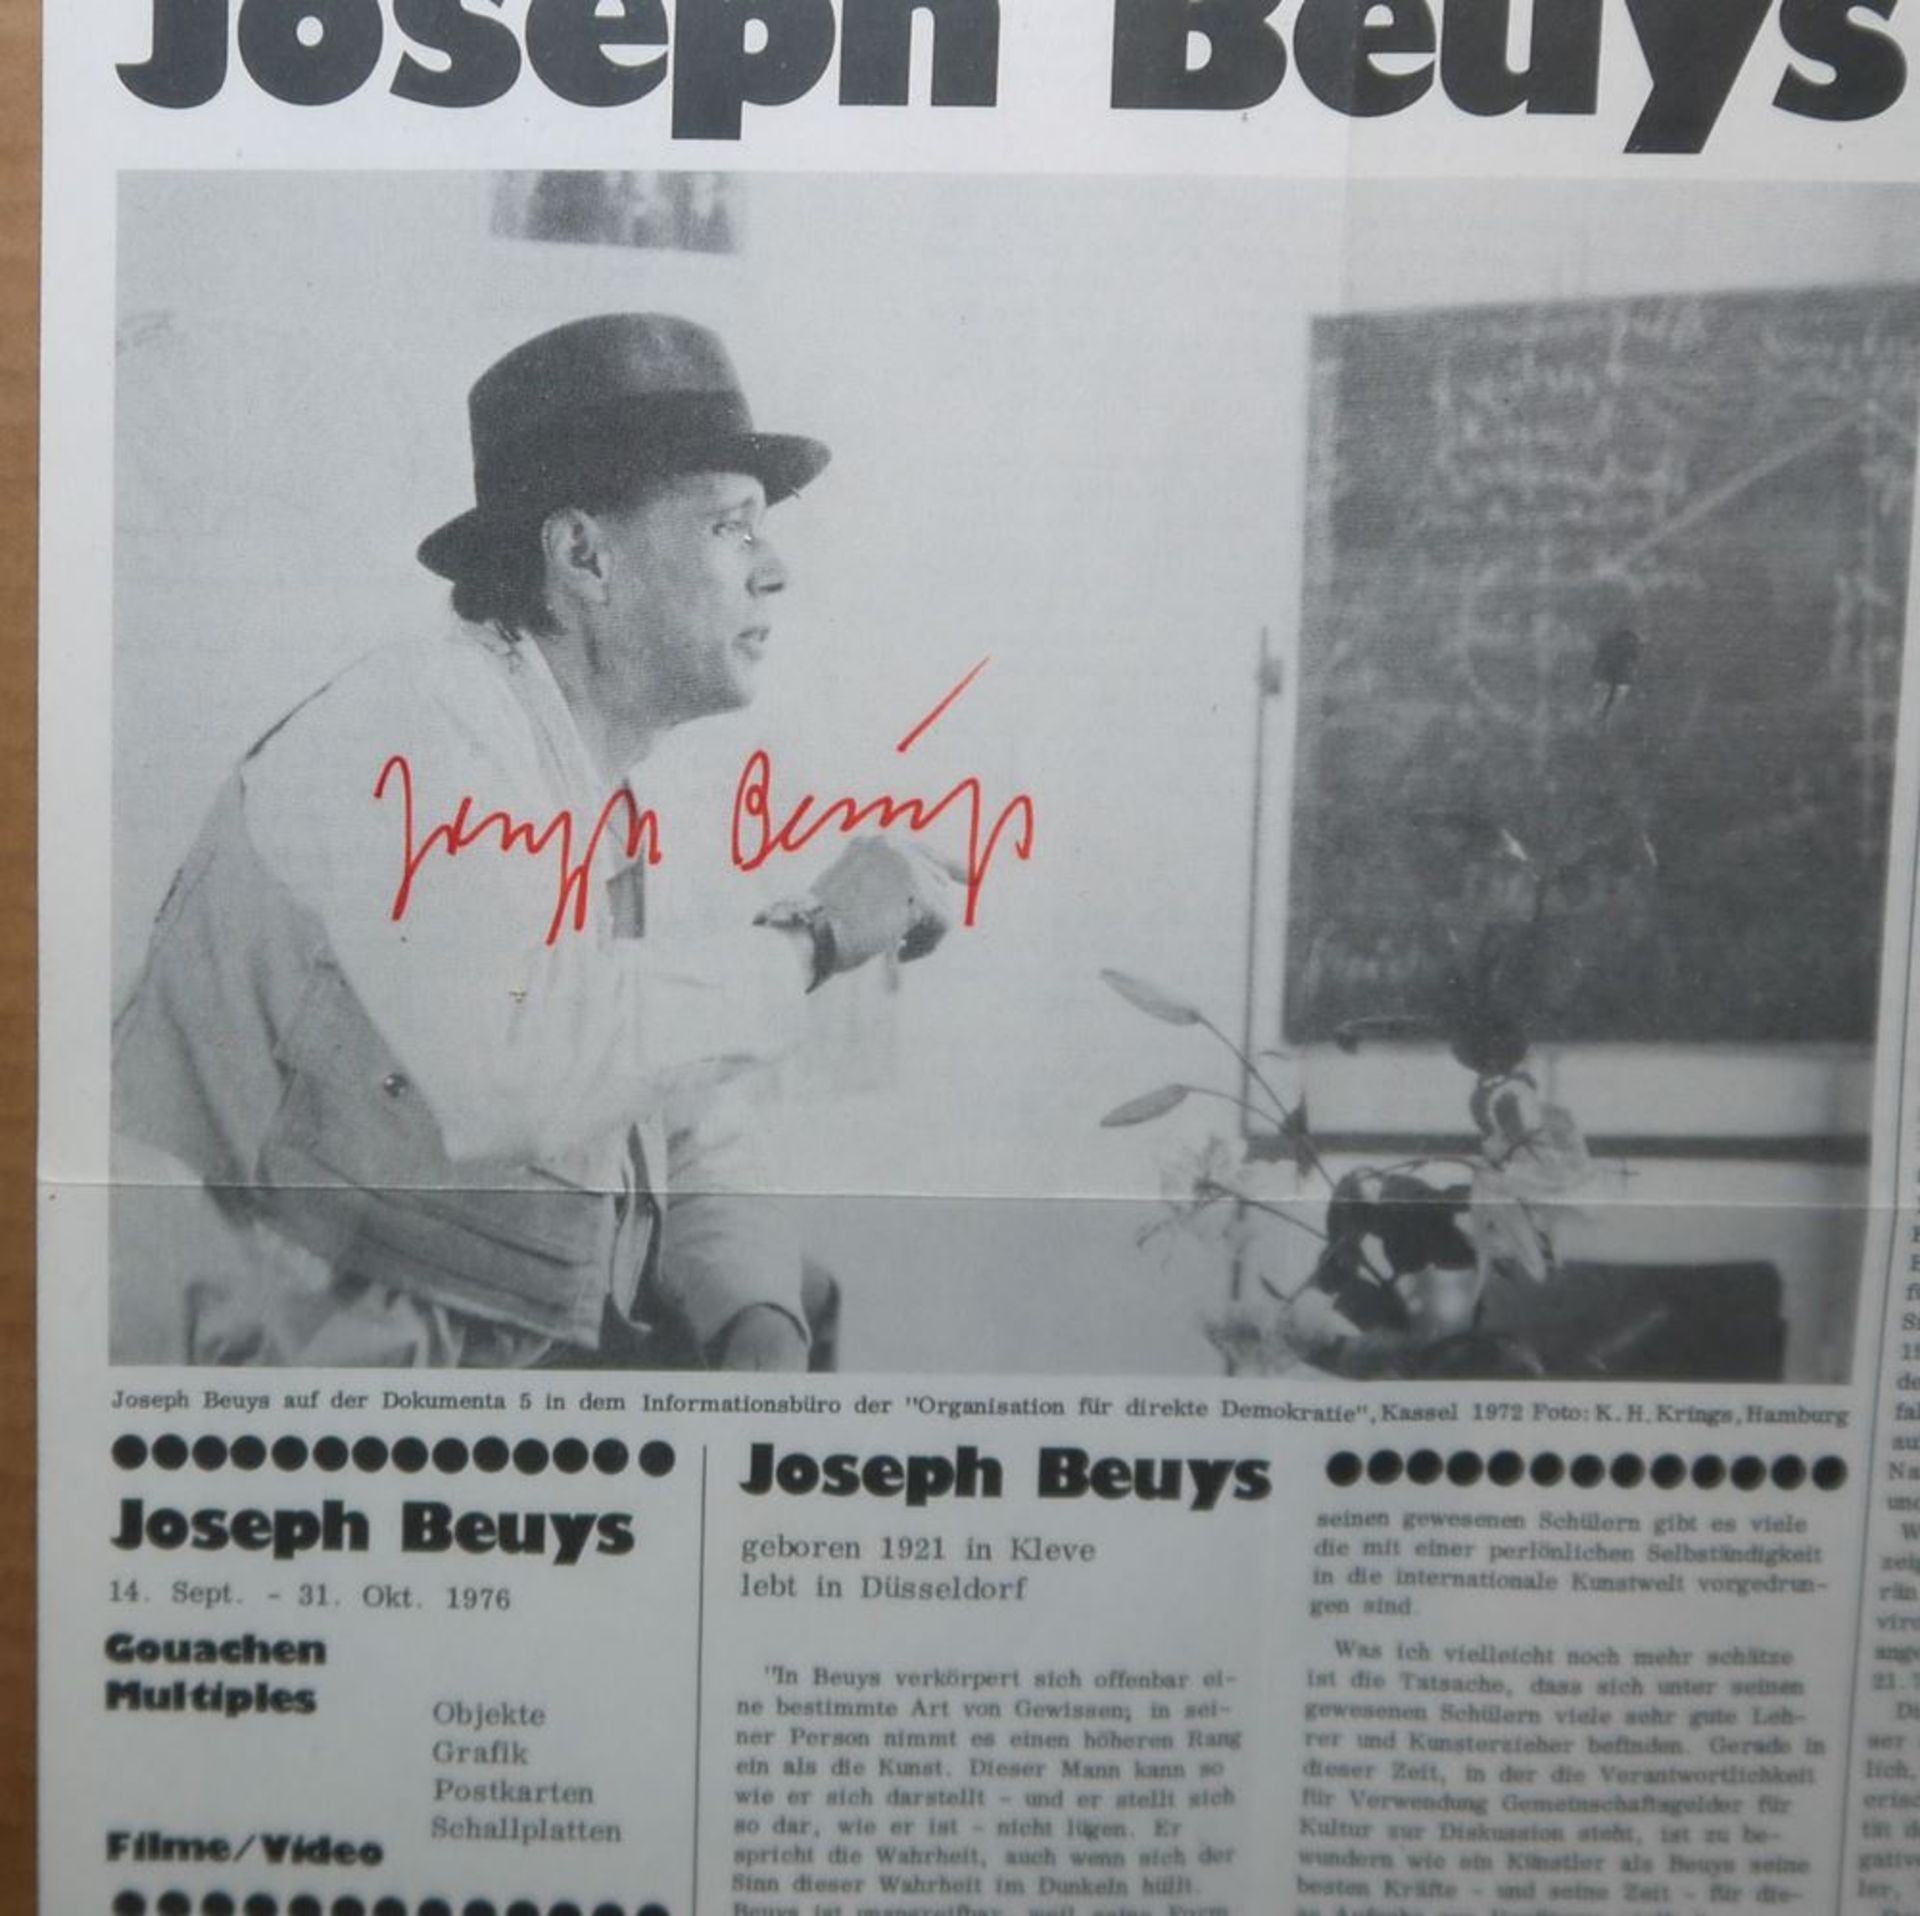 Joseph Beuys, "Painting Box Post", signierte Offsetgraphik, Zürich 1976, gerahmt - Image 2 of 2